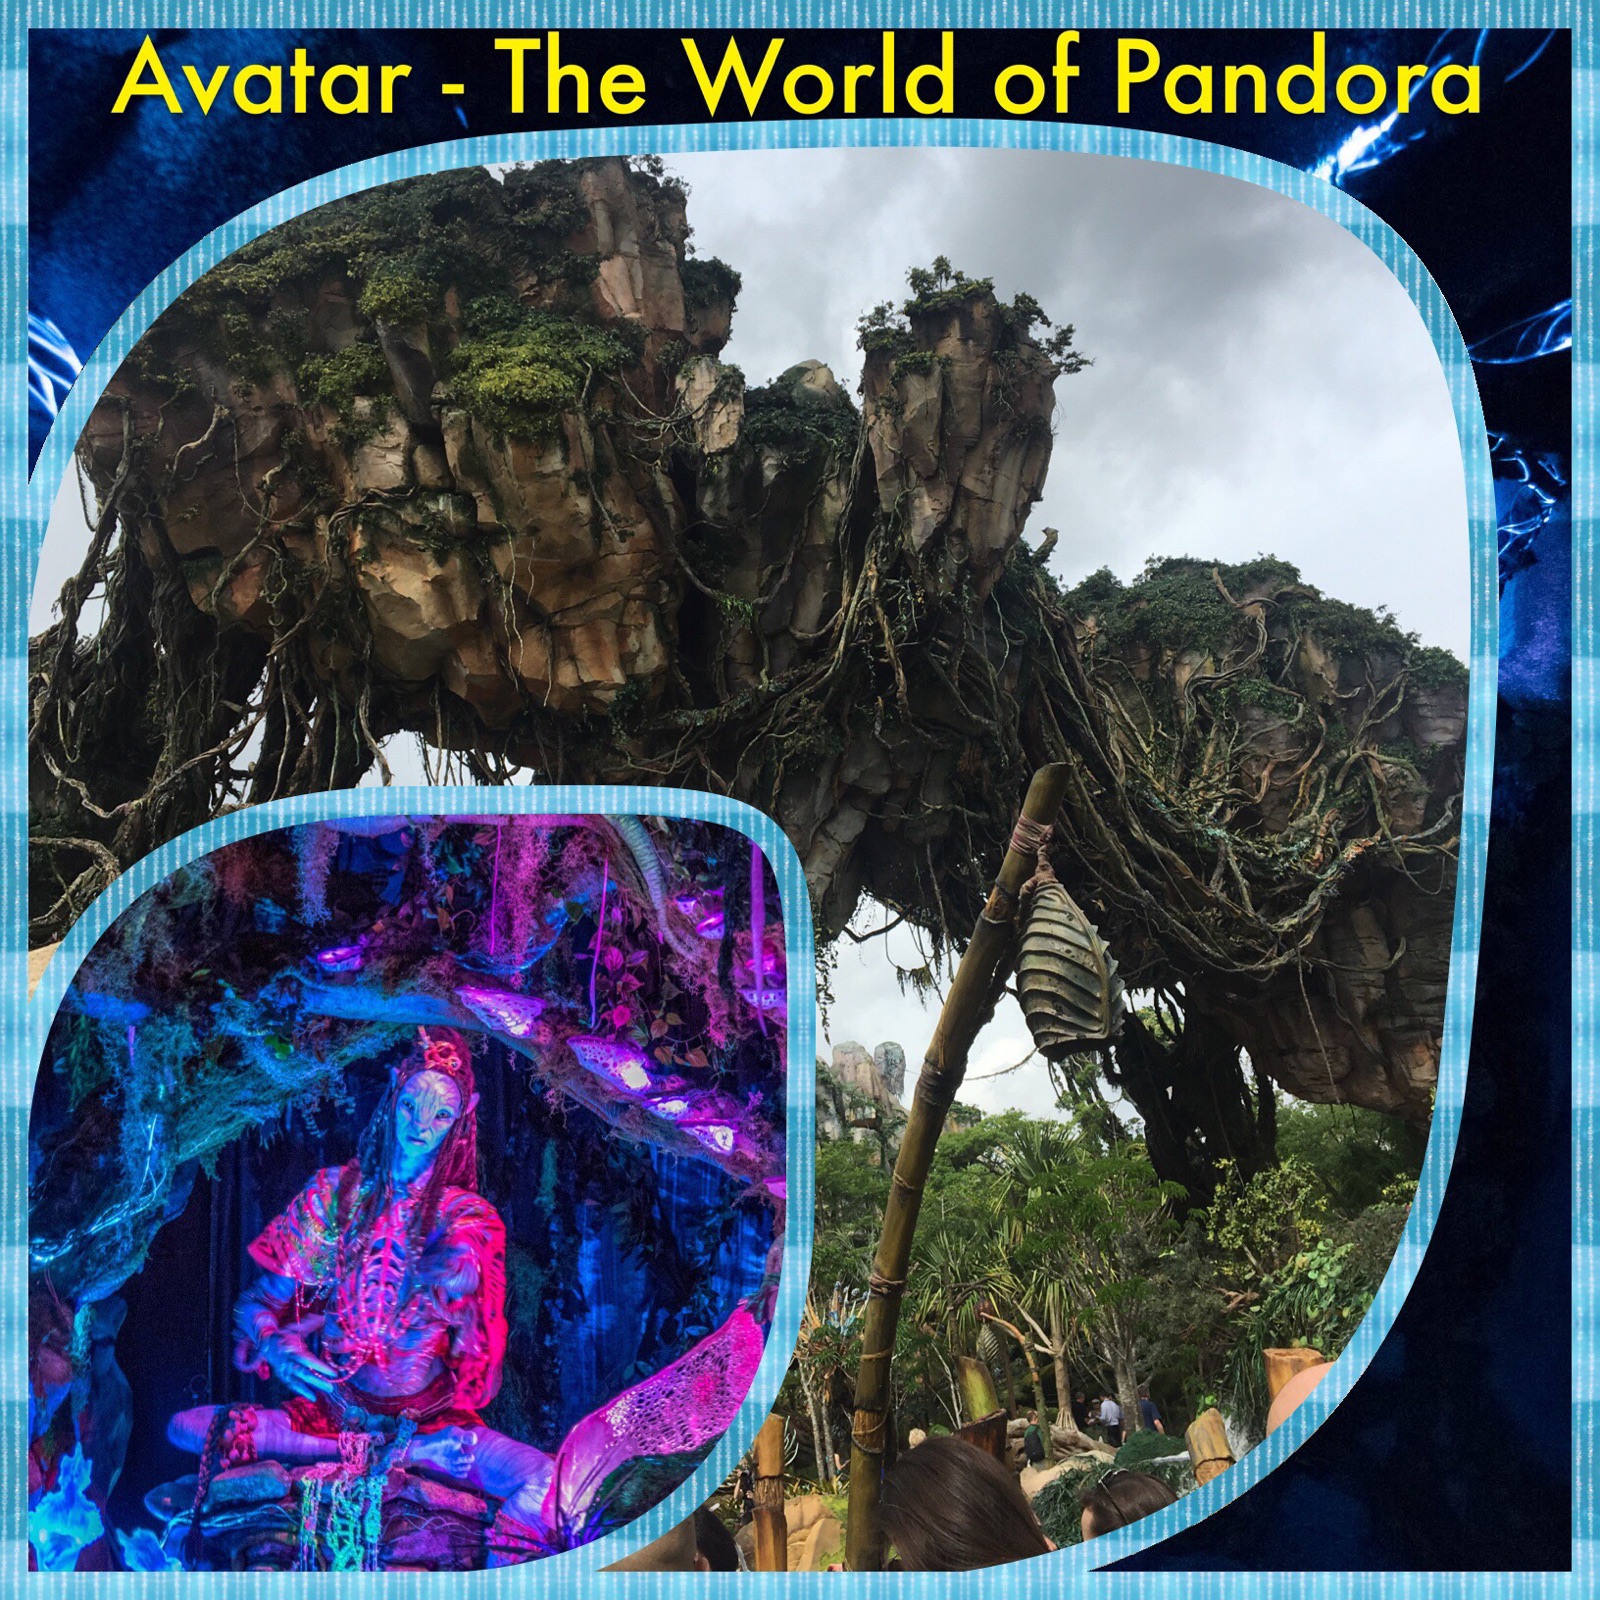 Pandora - World of Avatar Review / Disney's Animal Kingdom — Build